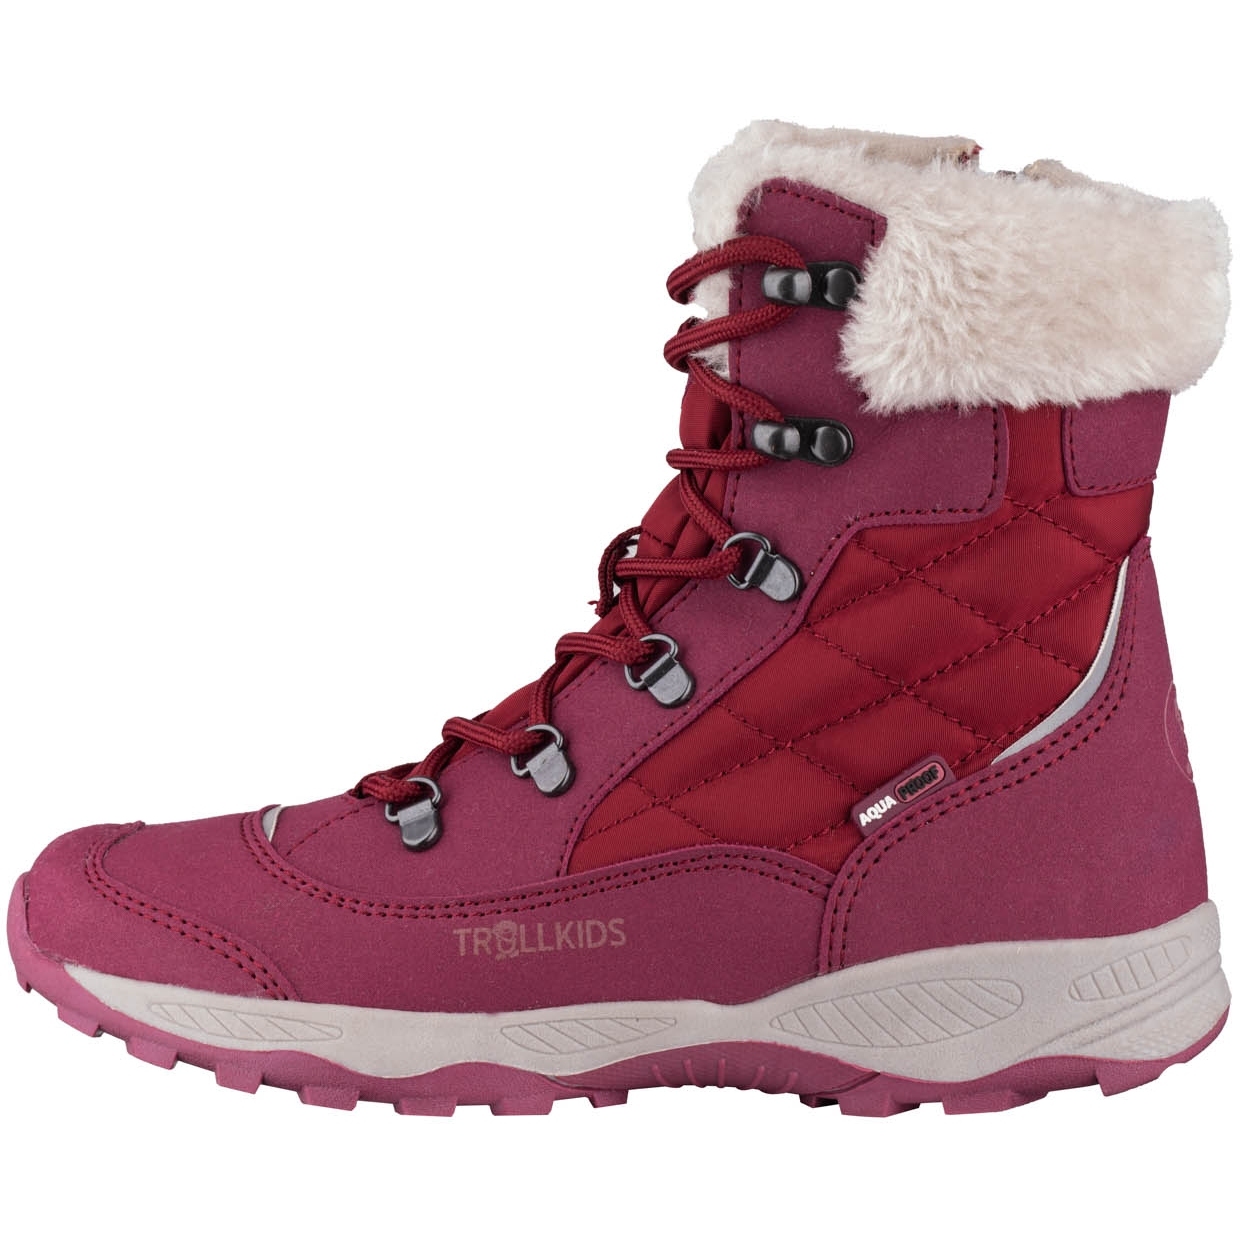 Productfoto van Trollkids Hemsedal Girls Winter Boots - Dark Rose